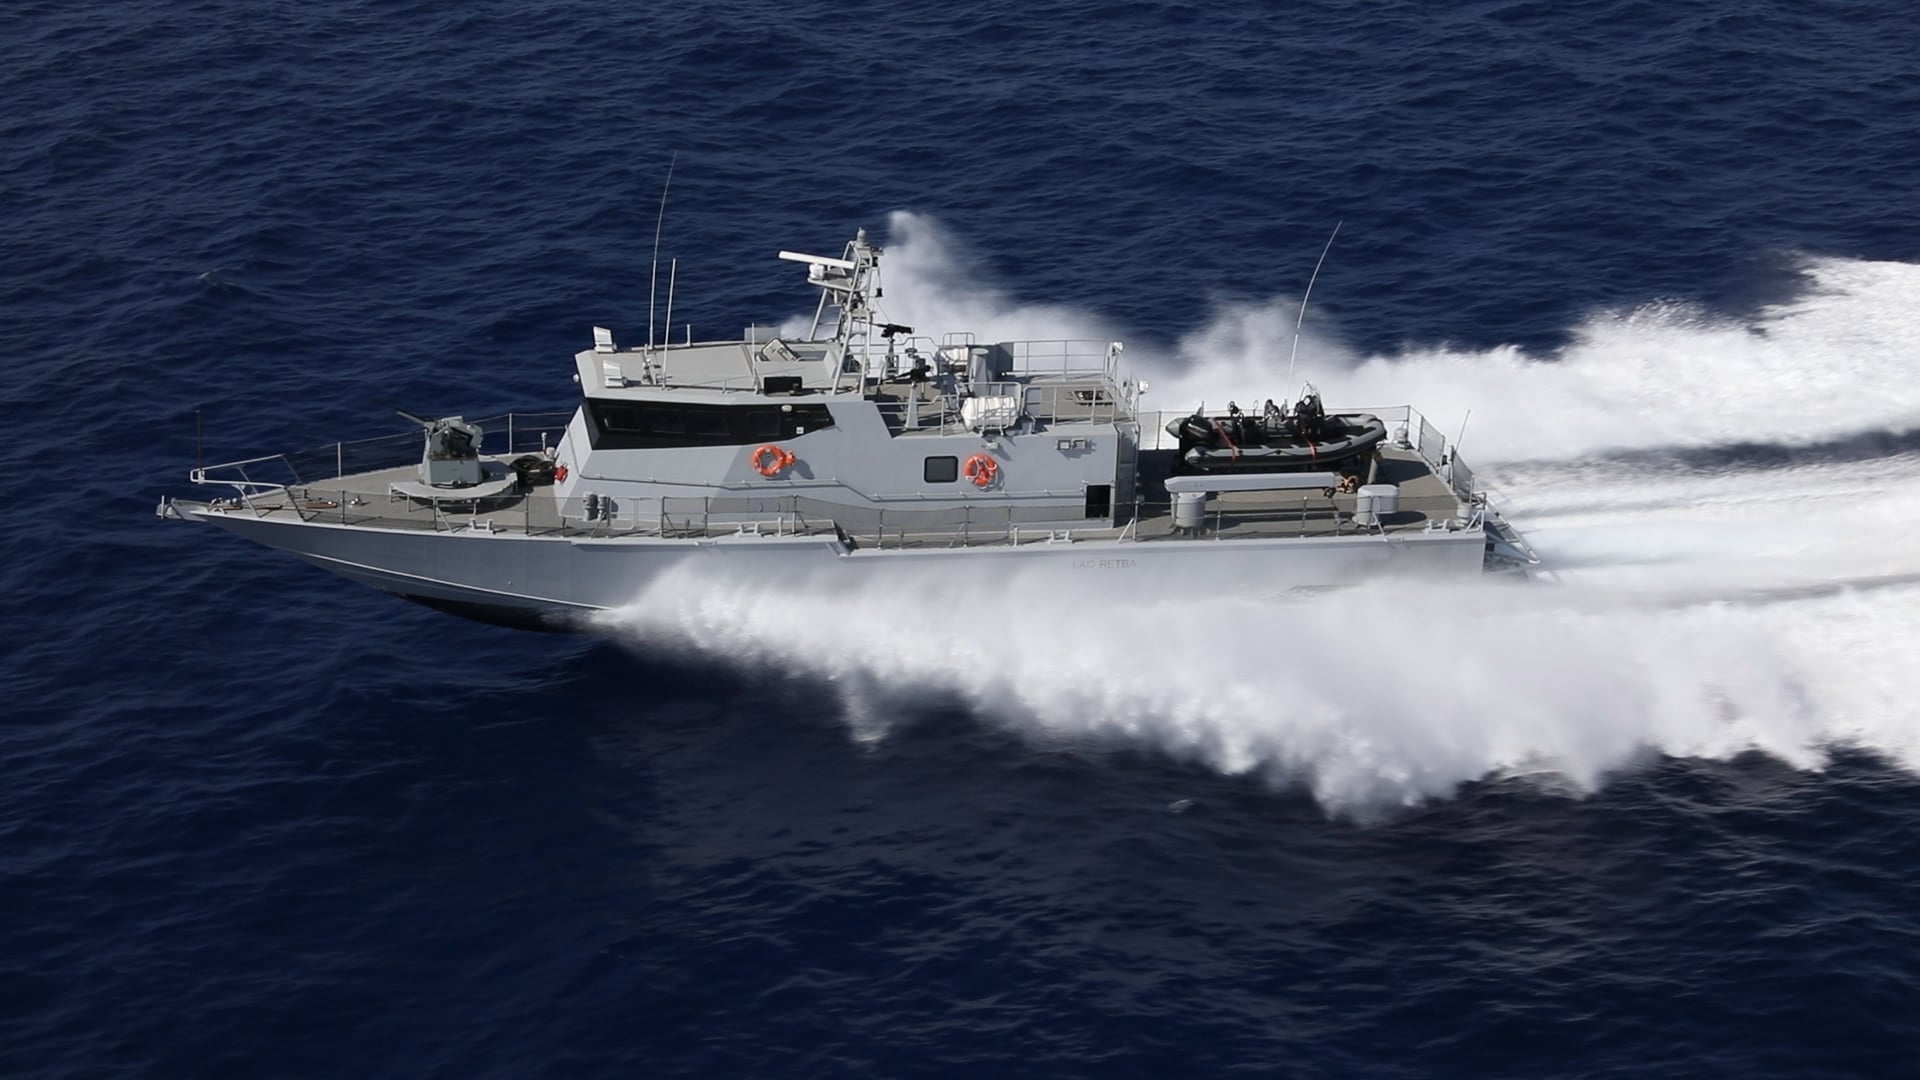  Israel Shipyards Shaldag MK V fast patrol boats